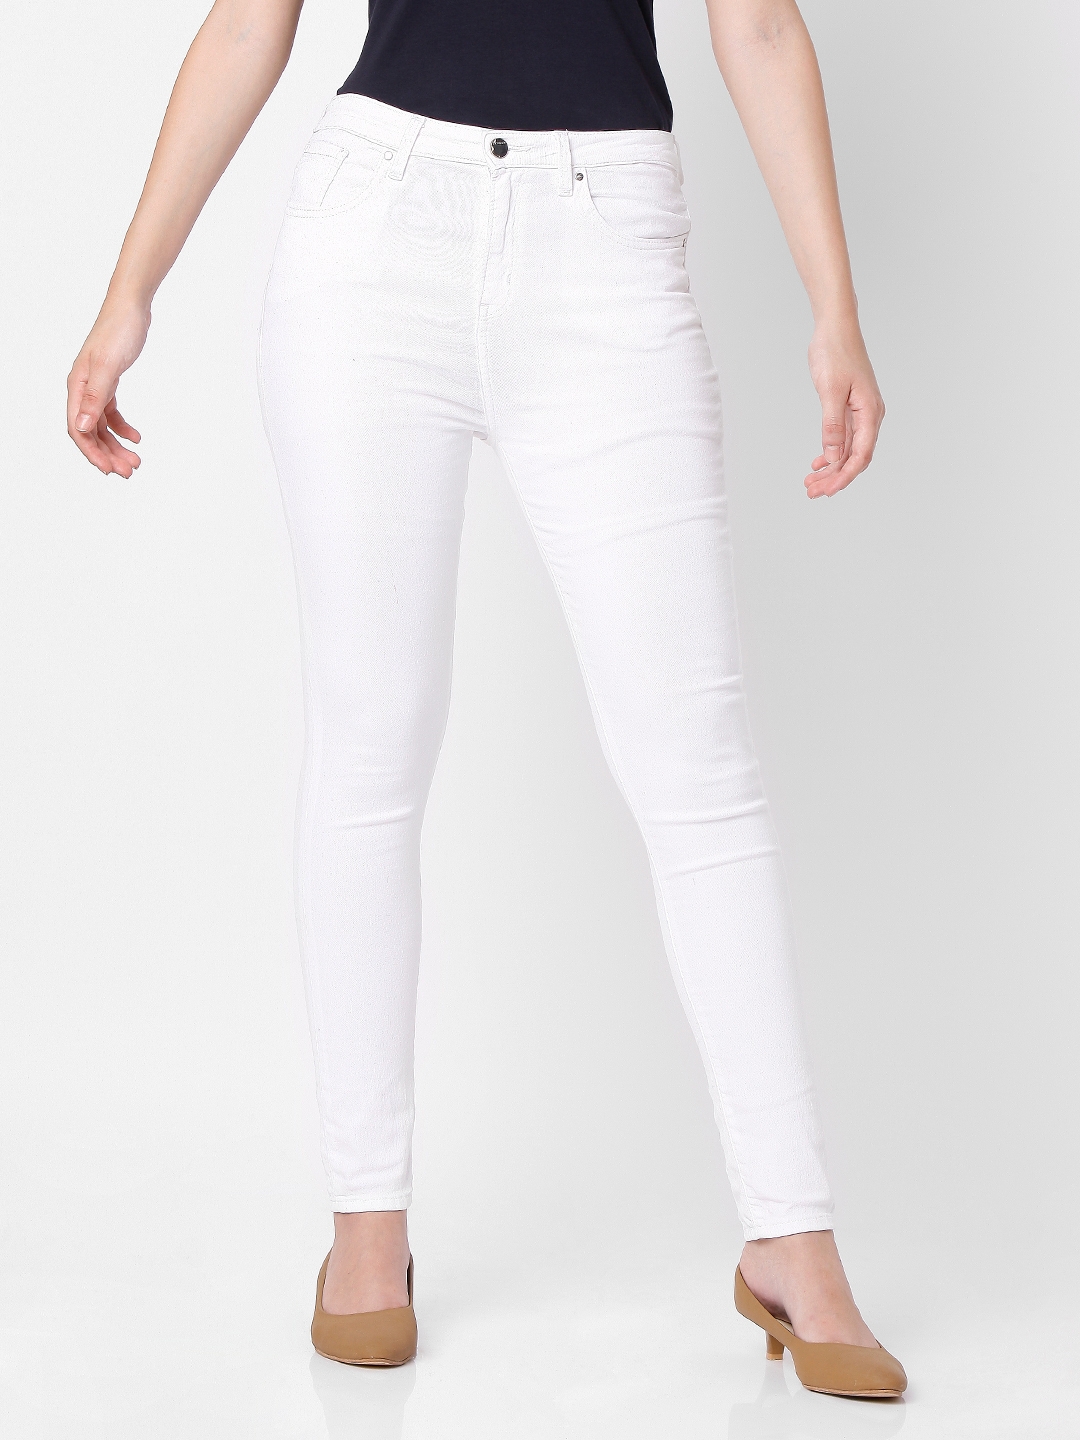 spykar | Women's White Cotton Solid Skinny Jeans 0